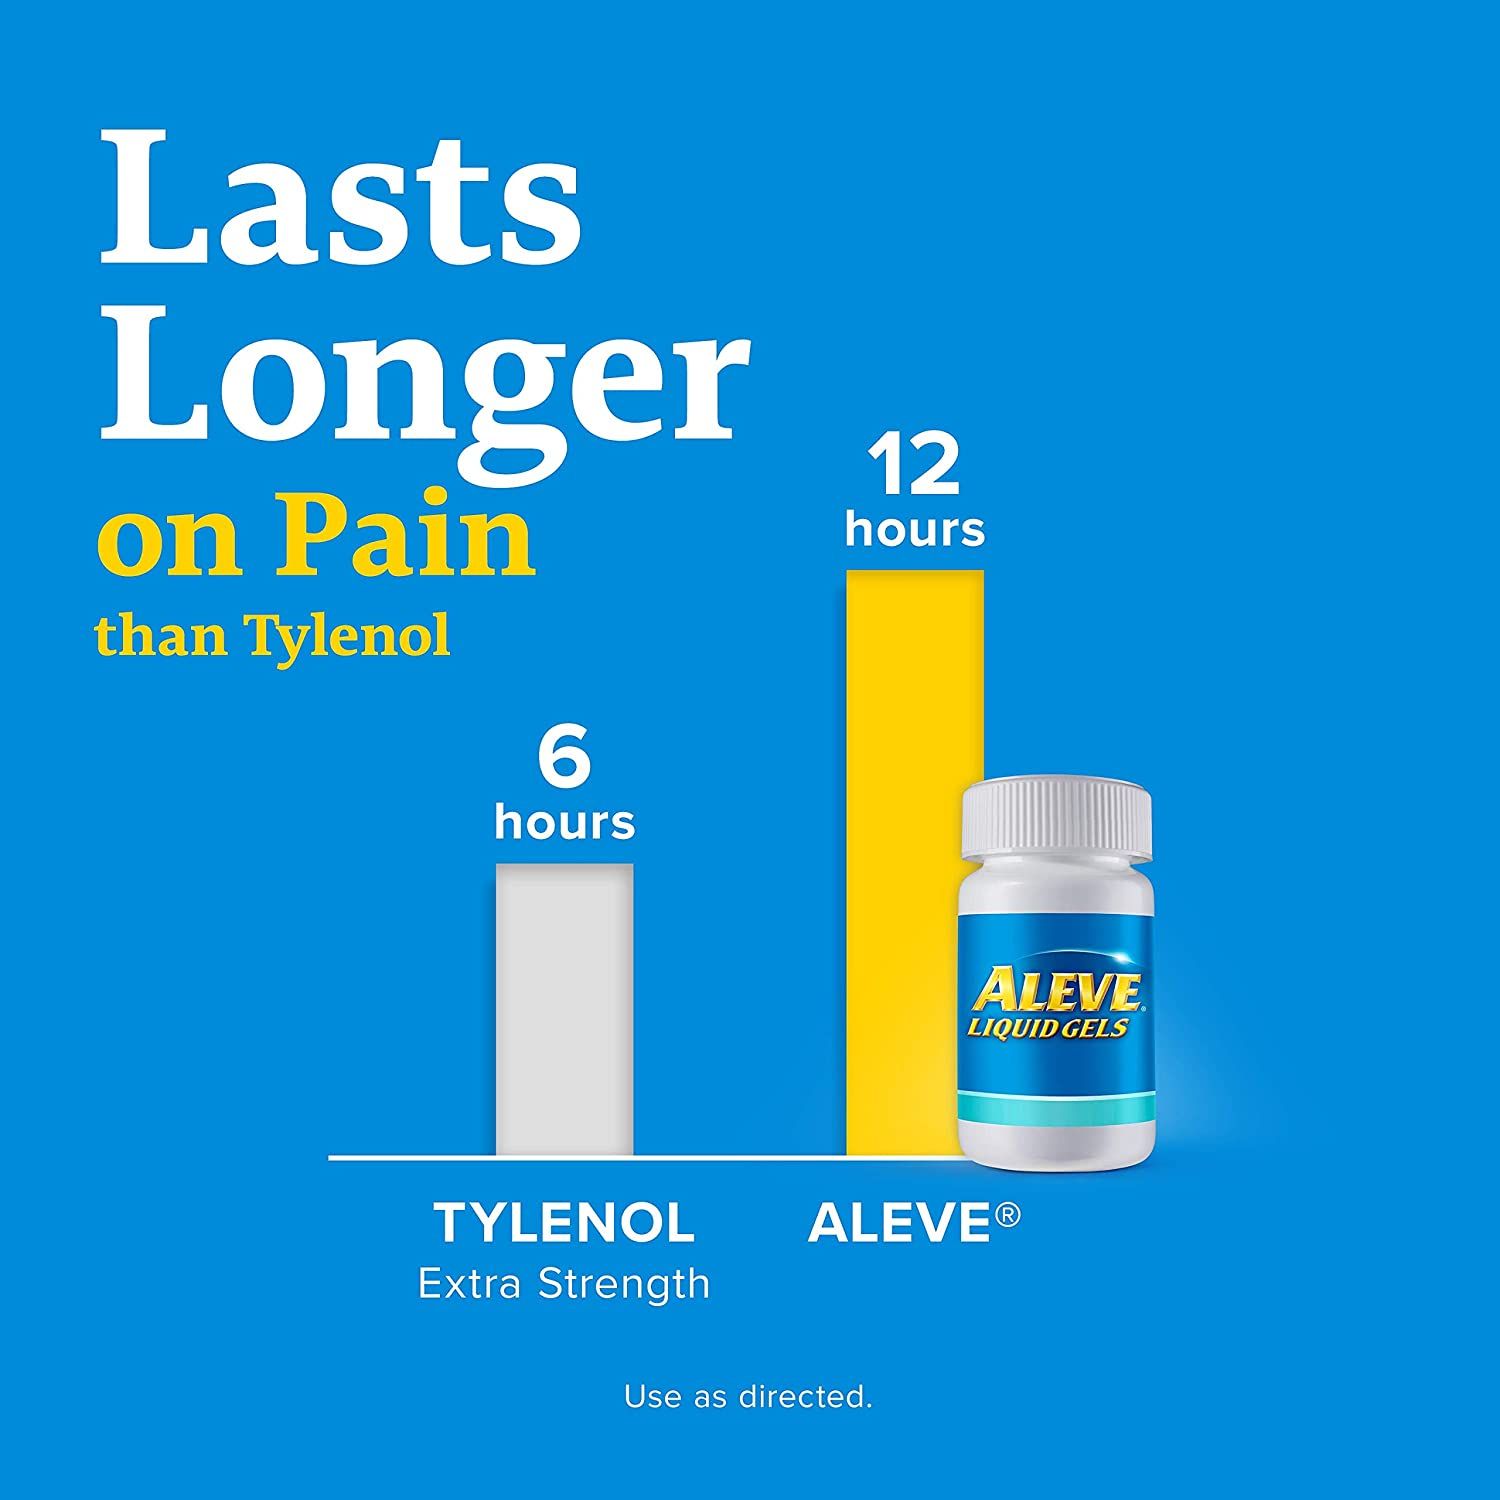 Aleve Liquid Gels Pain Reliever Capsules, 220 mg - 40 ct